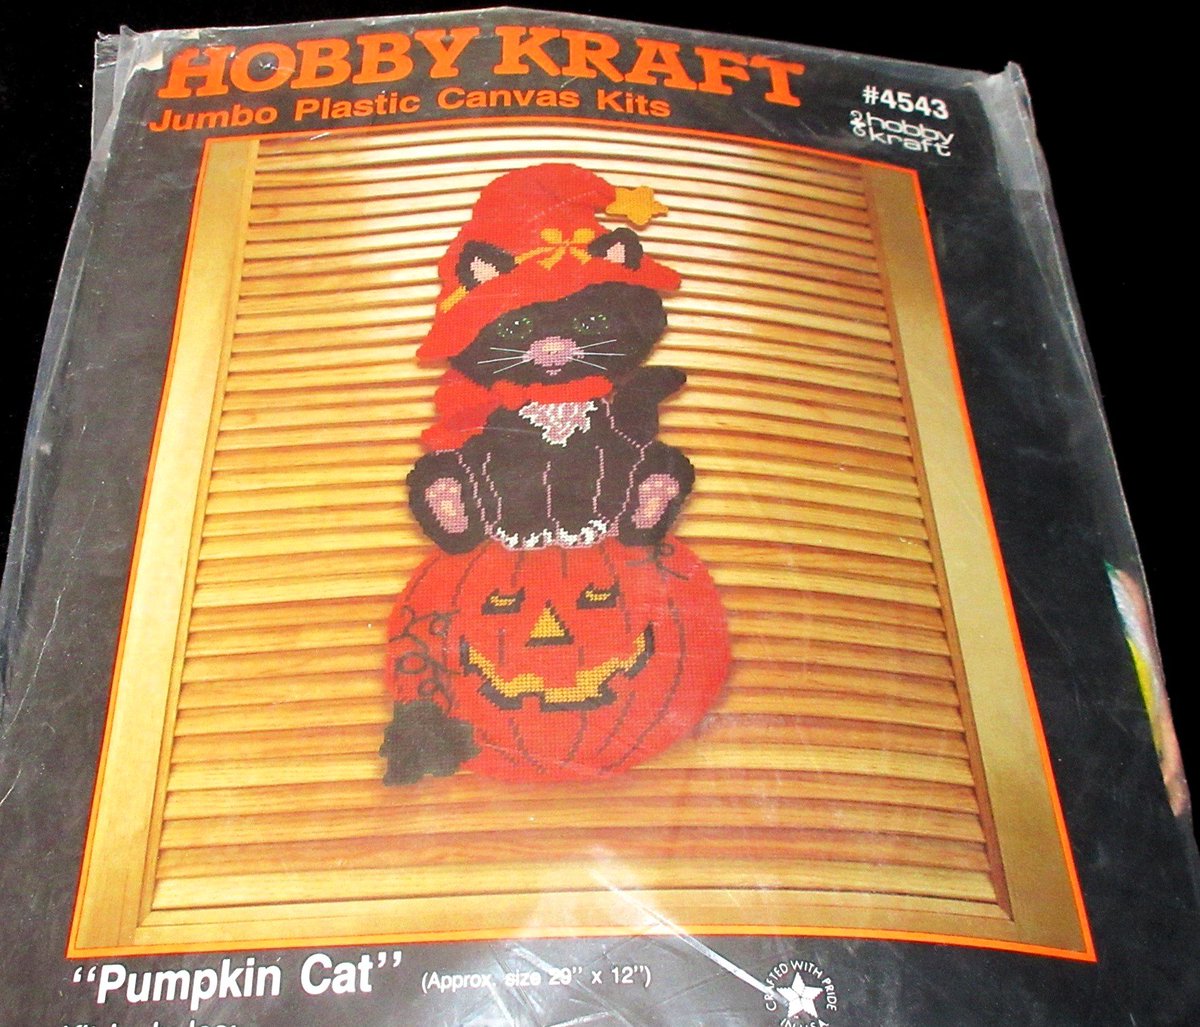 Hobby Kraft Halloween PUMPKIN CAT Jumbo Plastic Canvas Kit #4543  29' X 12' ebay.com/itm/2355040525……… #eBay via
@eBay

#jackolantern #Craftideas #Crafts #Halloween #decor #blackcat #pumpkin #CrossStitch #PlasticCanvas #spooky #Home